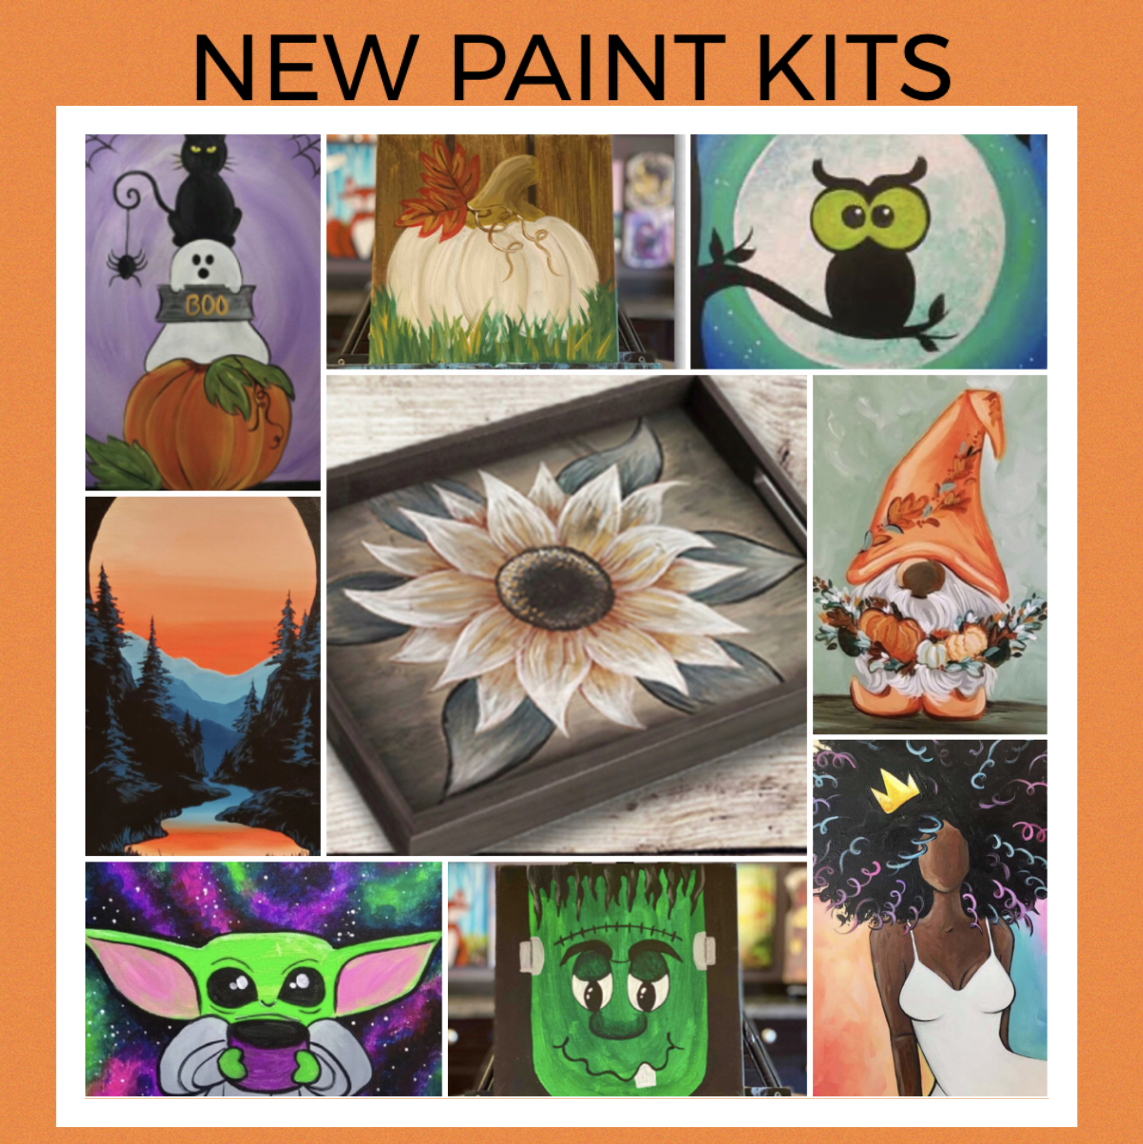 Take Home Paint Kits